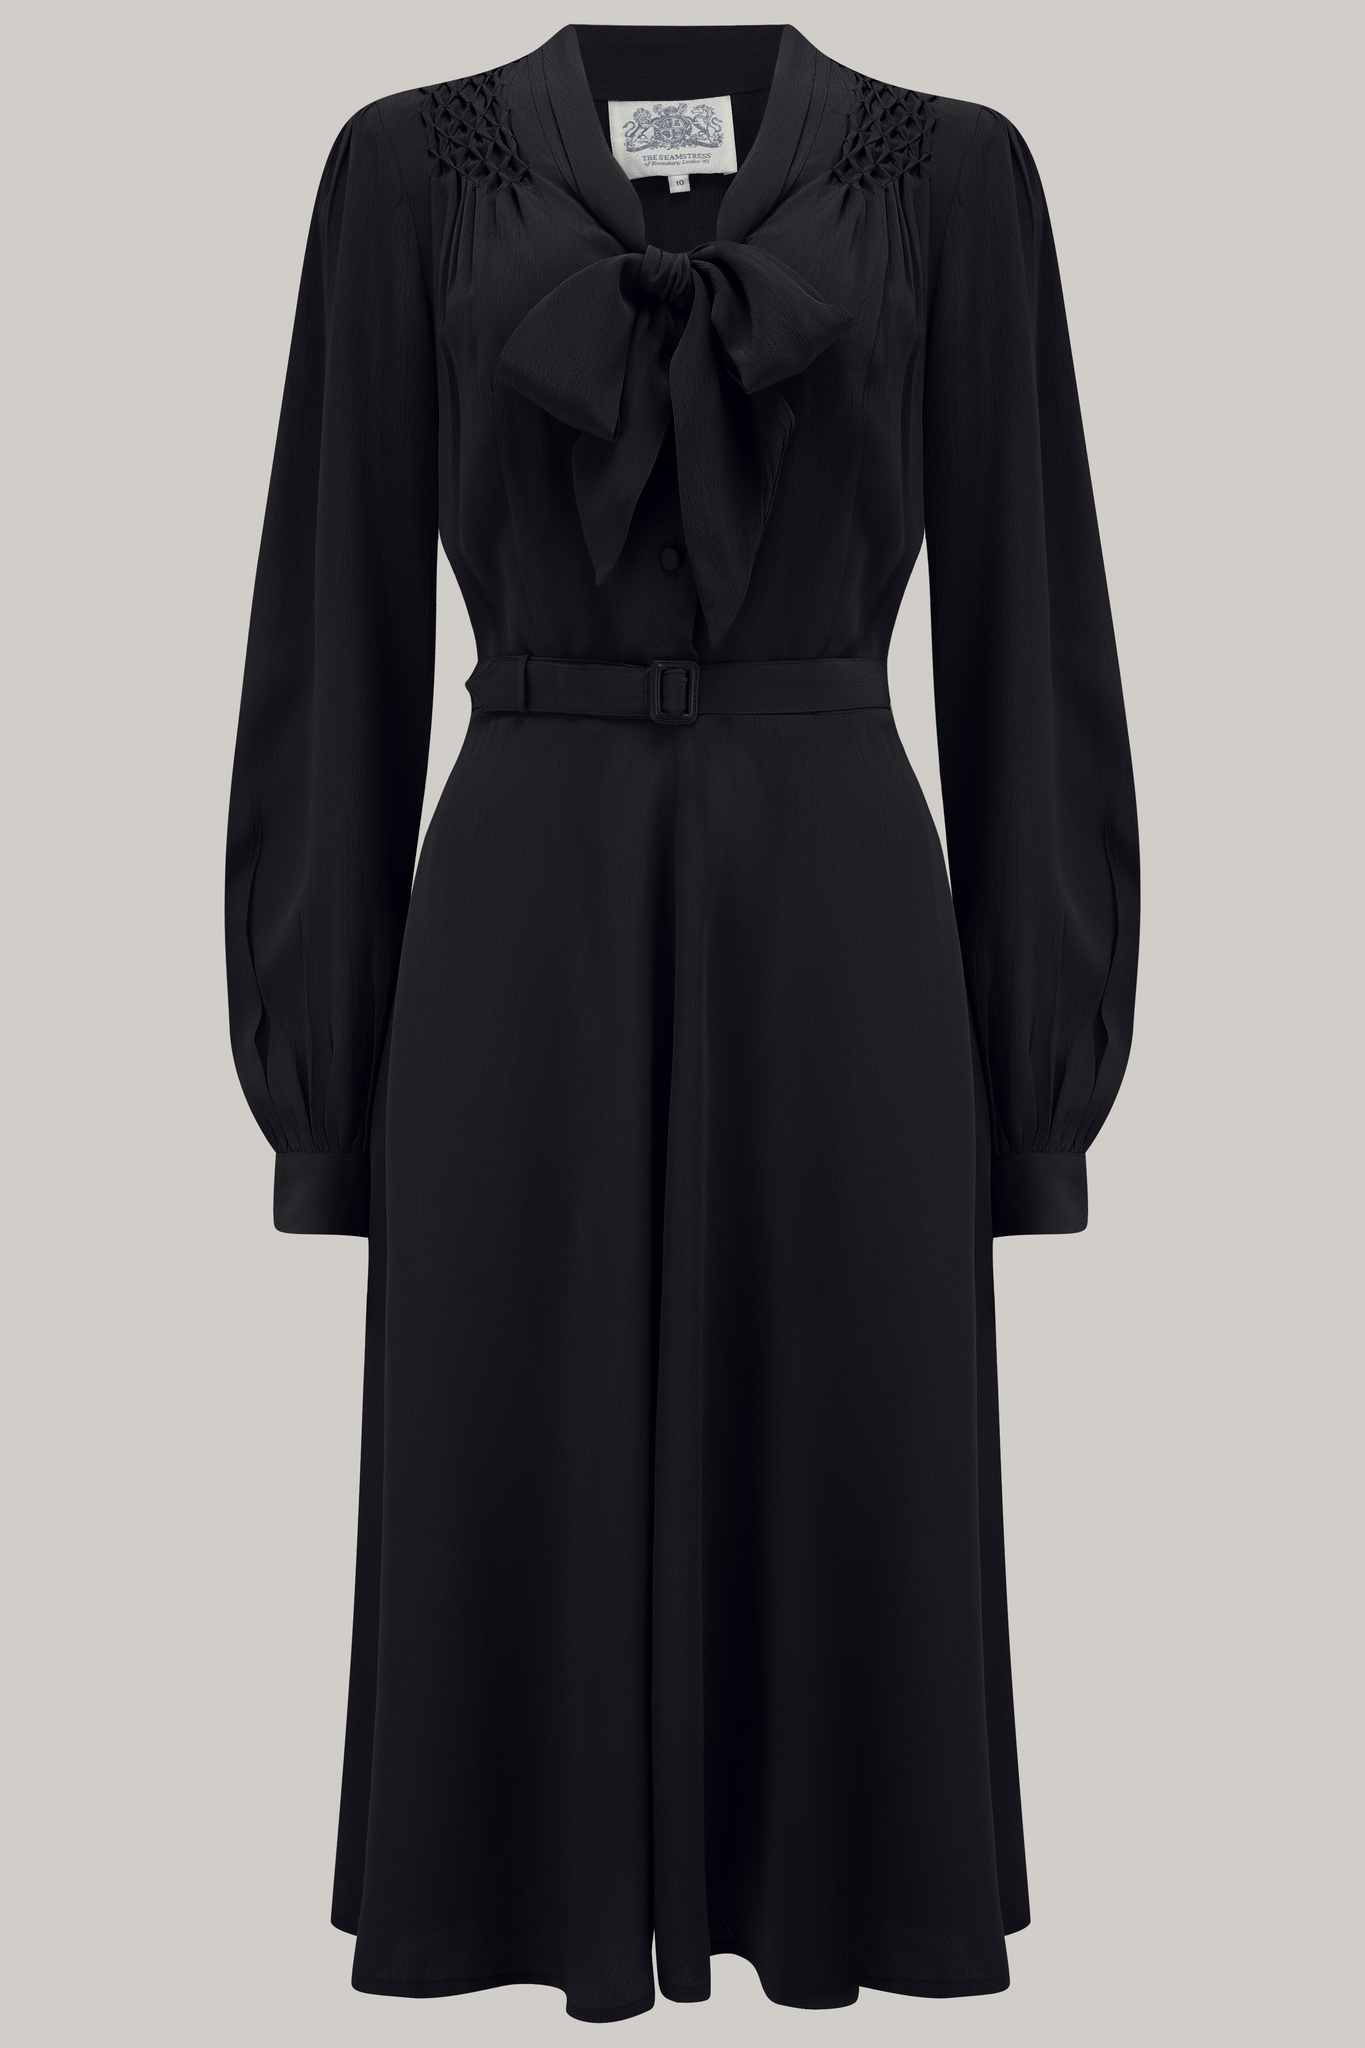 "Eva" Dress in Black , Classic 1940's Style Long Sleeve Dress with Tie Neck - CC41, Goodwood Revival, Twinwood Festival, Viva Las Vegas Rockabilly Weekend Rock n Romance The Seamstress Of Bloomsbury